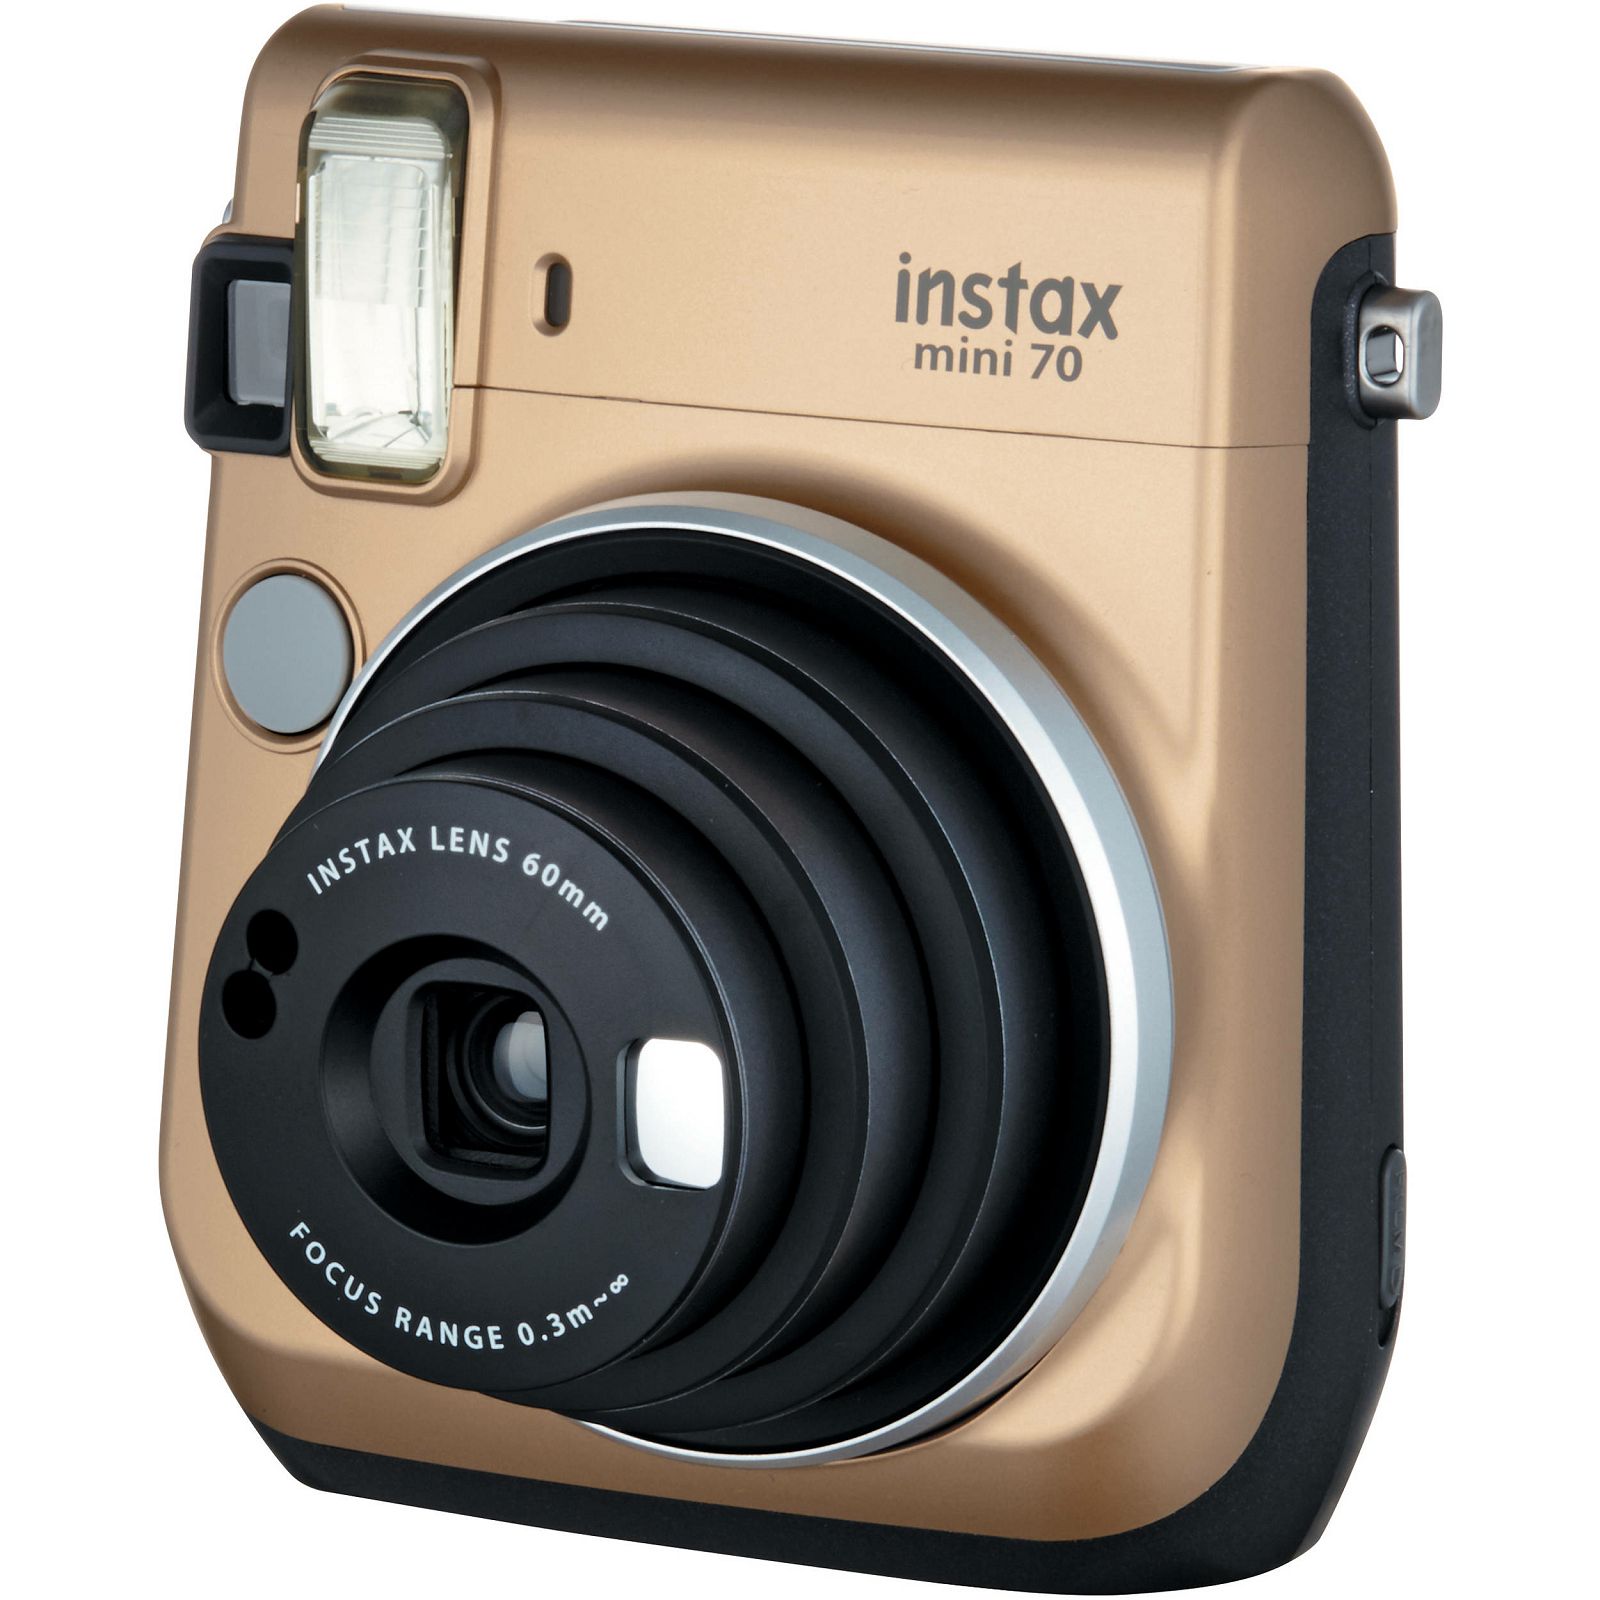 Fujifilm Instax mini 70 Instant Film Camera (Gold) Zlatni Fuji polaroidni fotoaparat s trenutnim ispisom fotografije